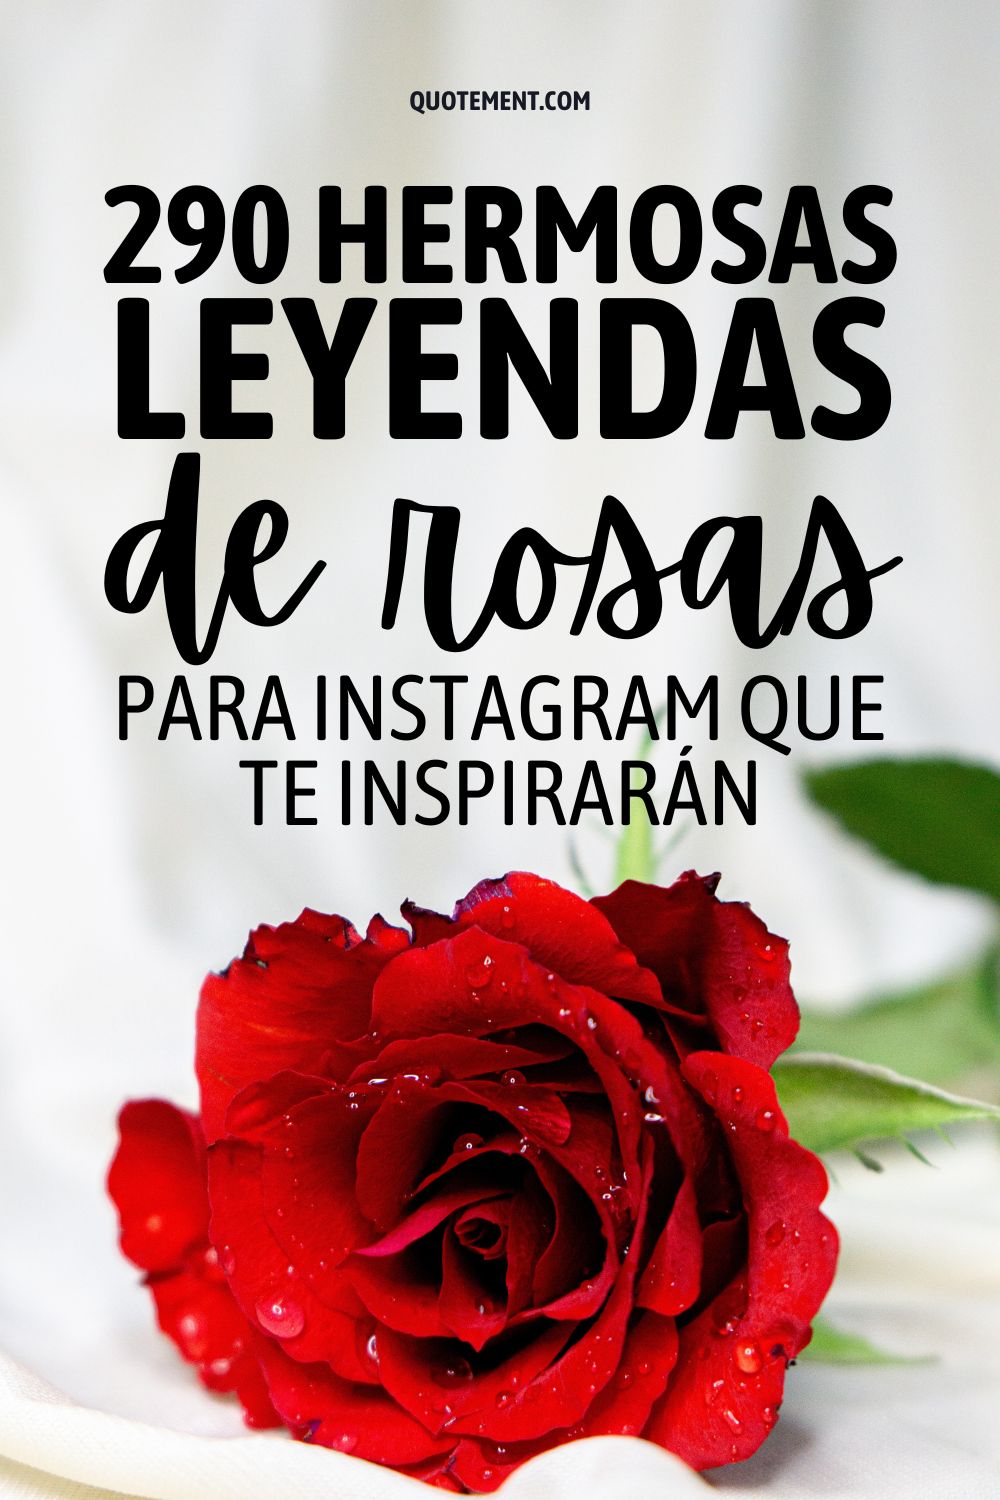 290 hermosas leyendas de rosas para Instagram que te inspirarán